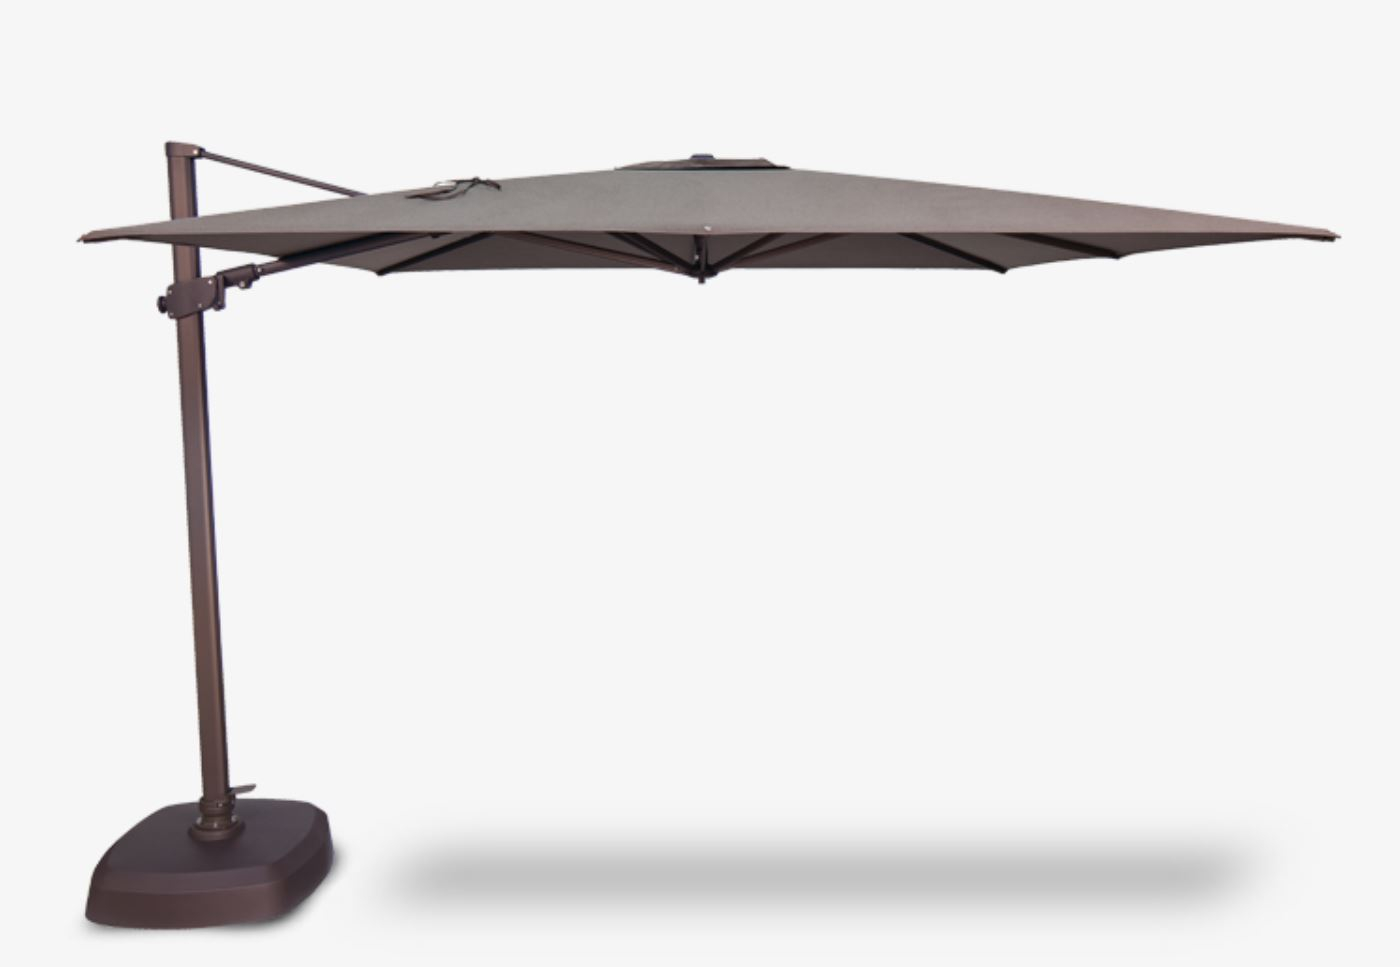 Treasure Garden 10' Cantilever Patio Umbrella